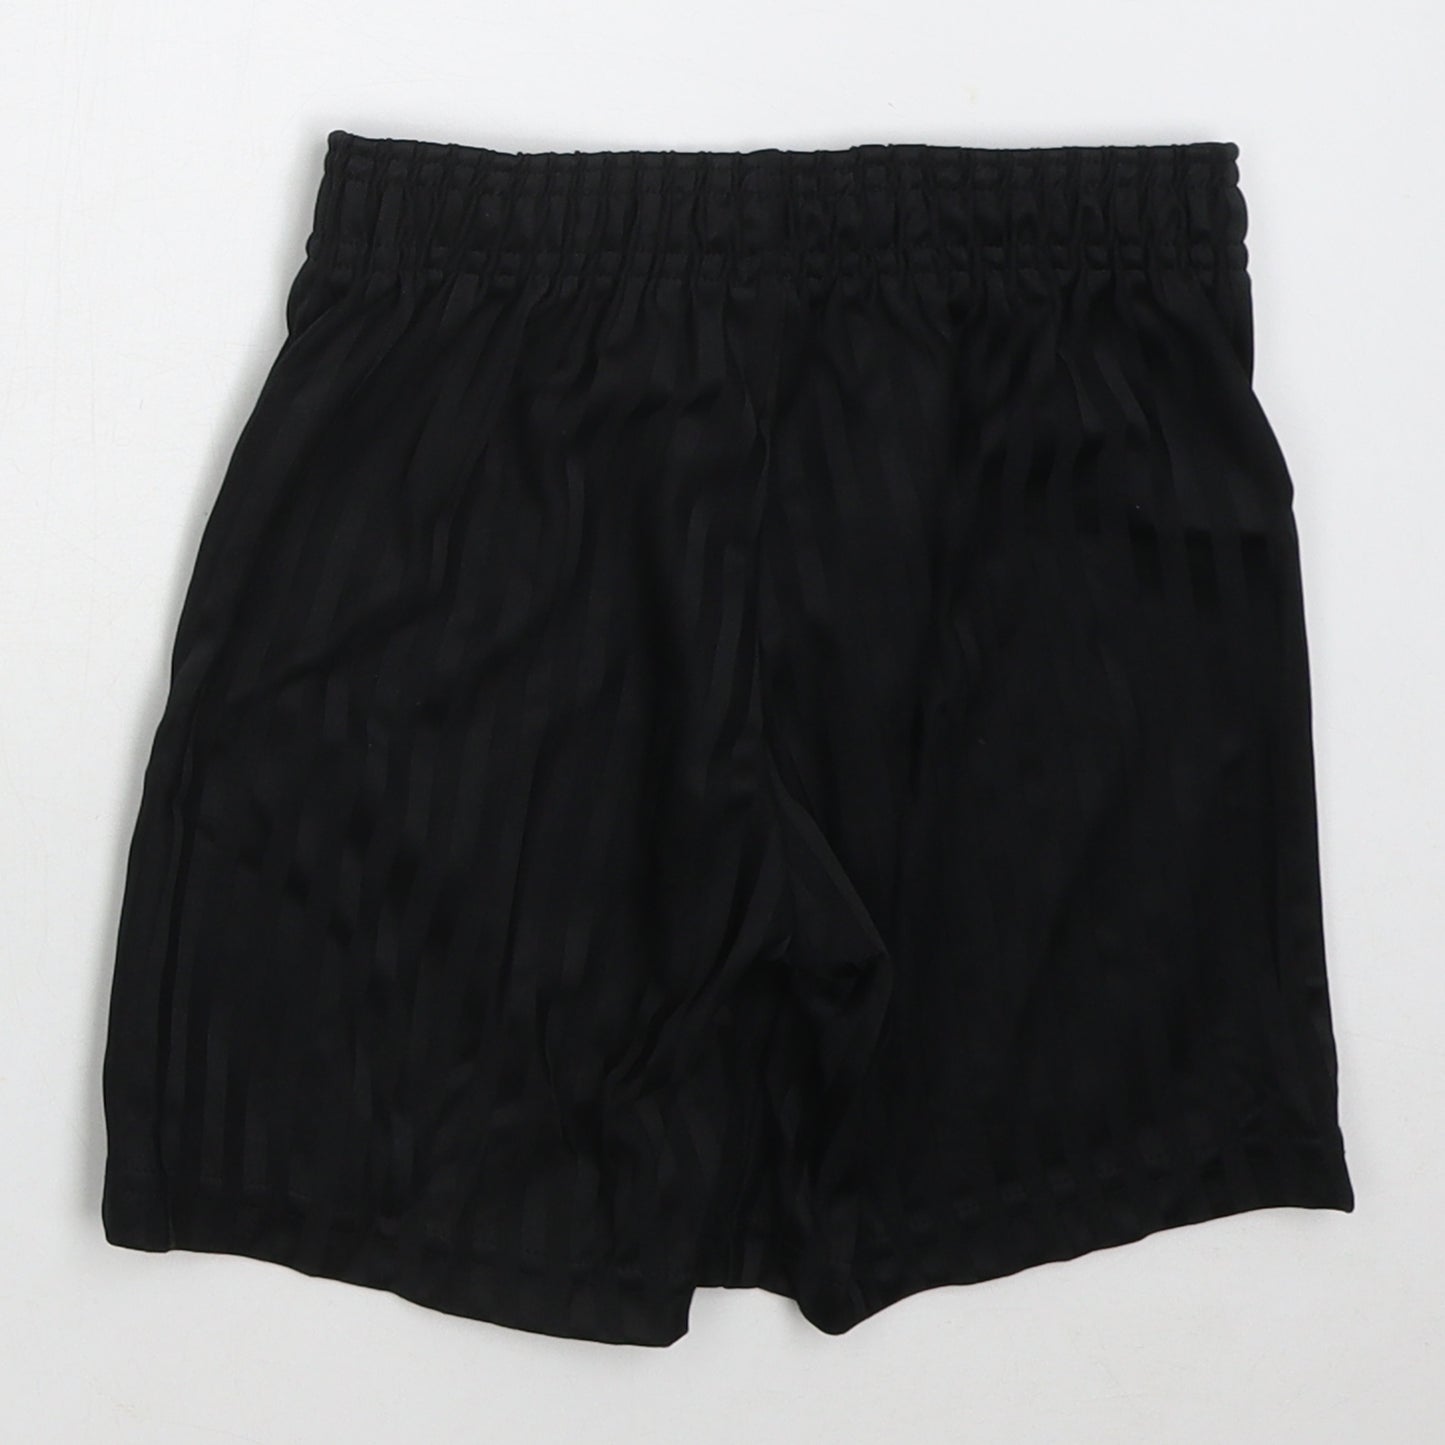 F&F Boys Black Striped Polyester Sweat Shorts Size 5-6 Years  Regular